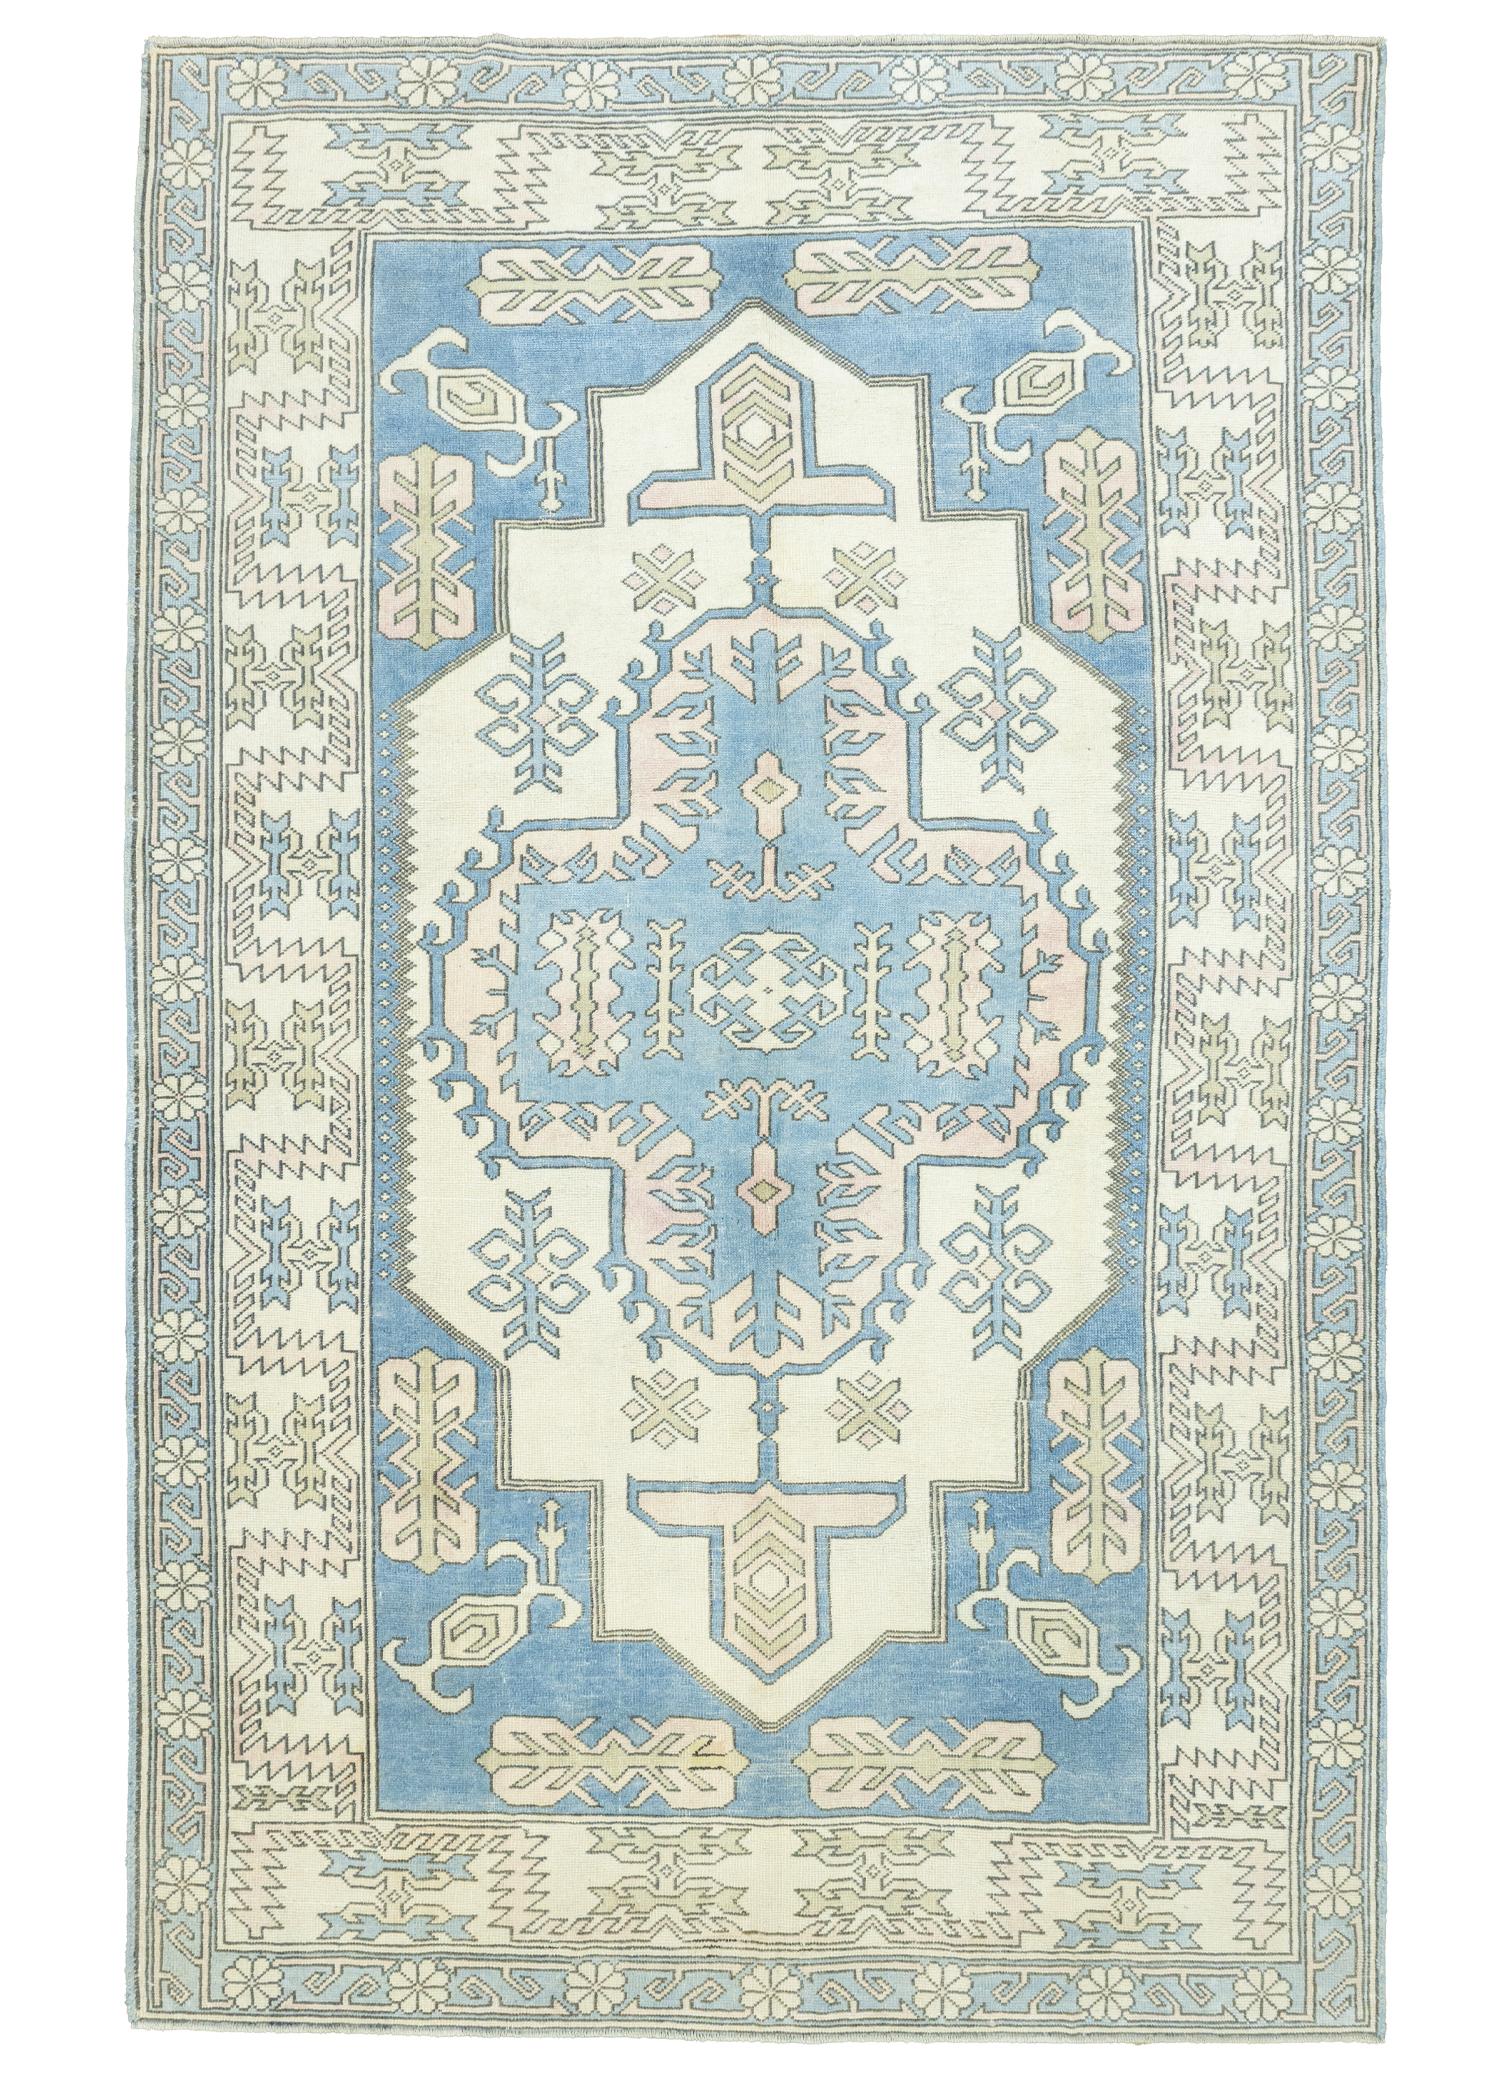 Liber Rustic Pattern Handwoven Wool Rug 215x324 cm